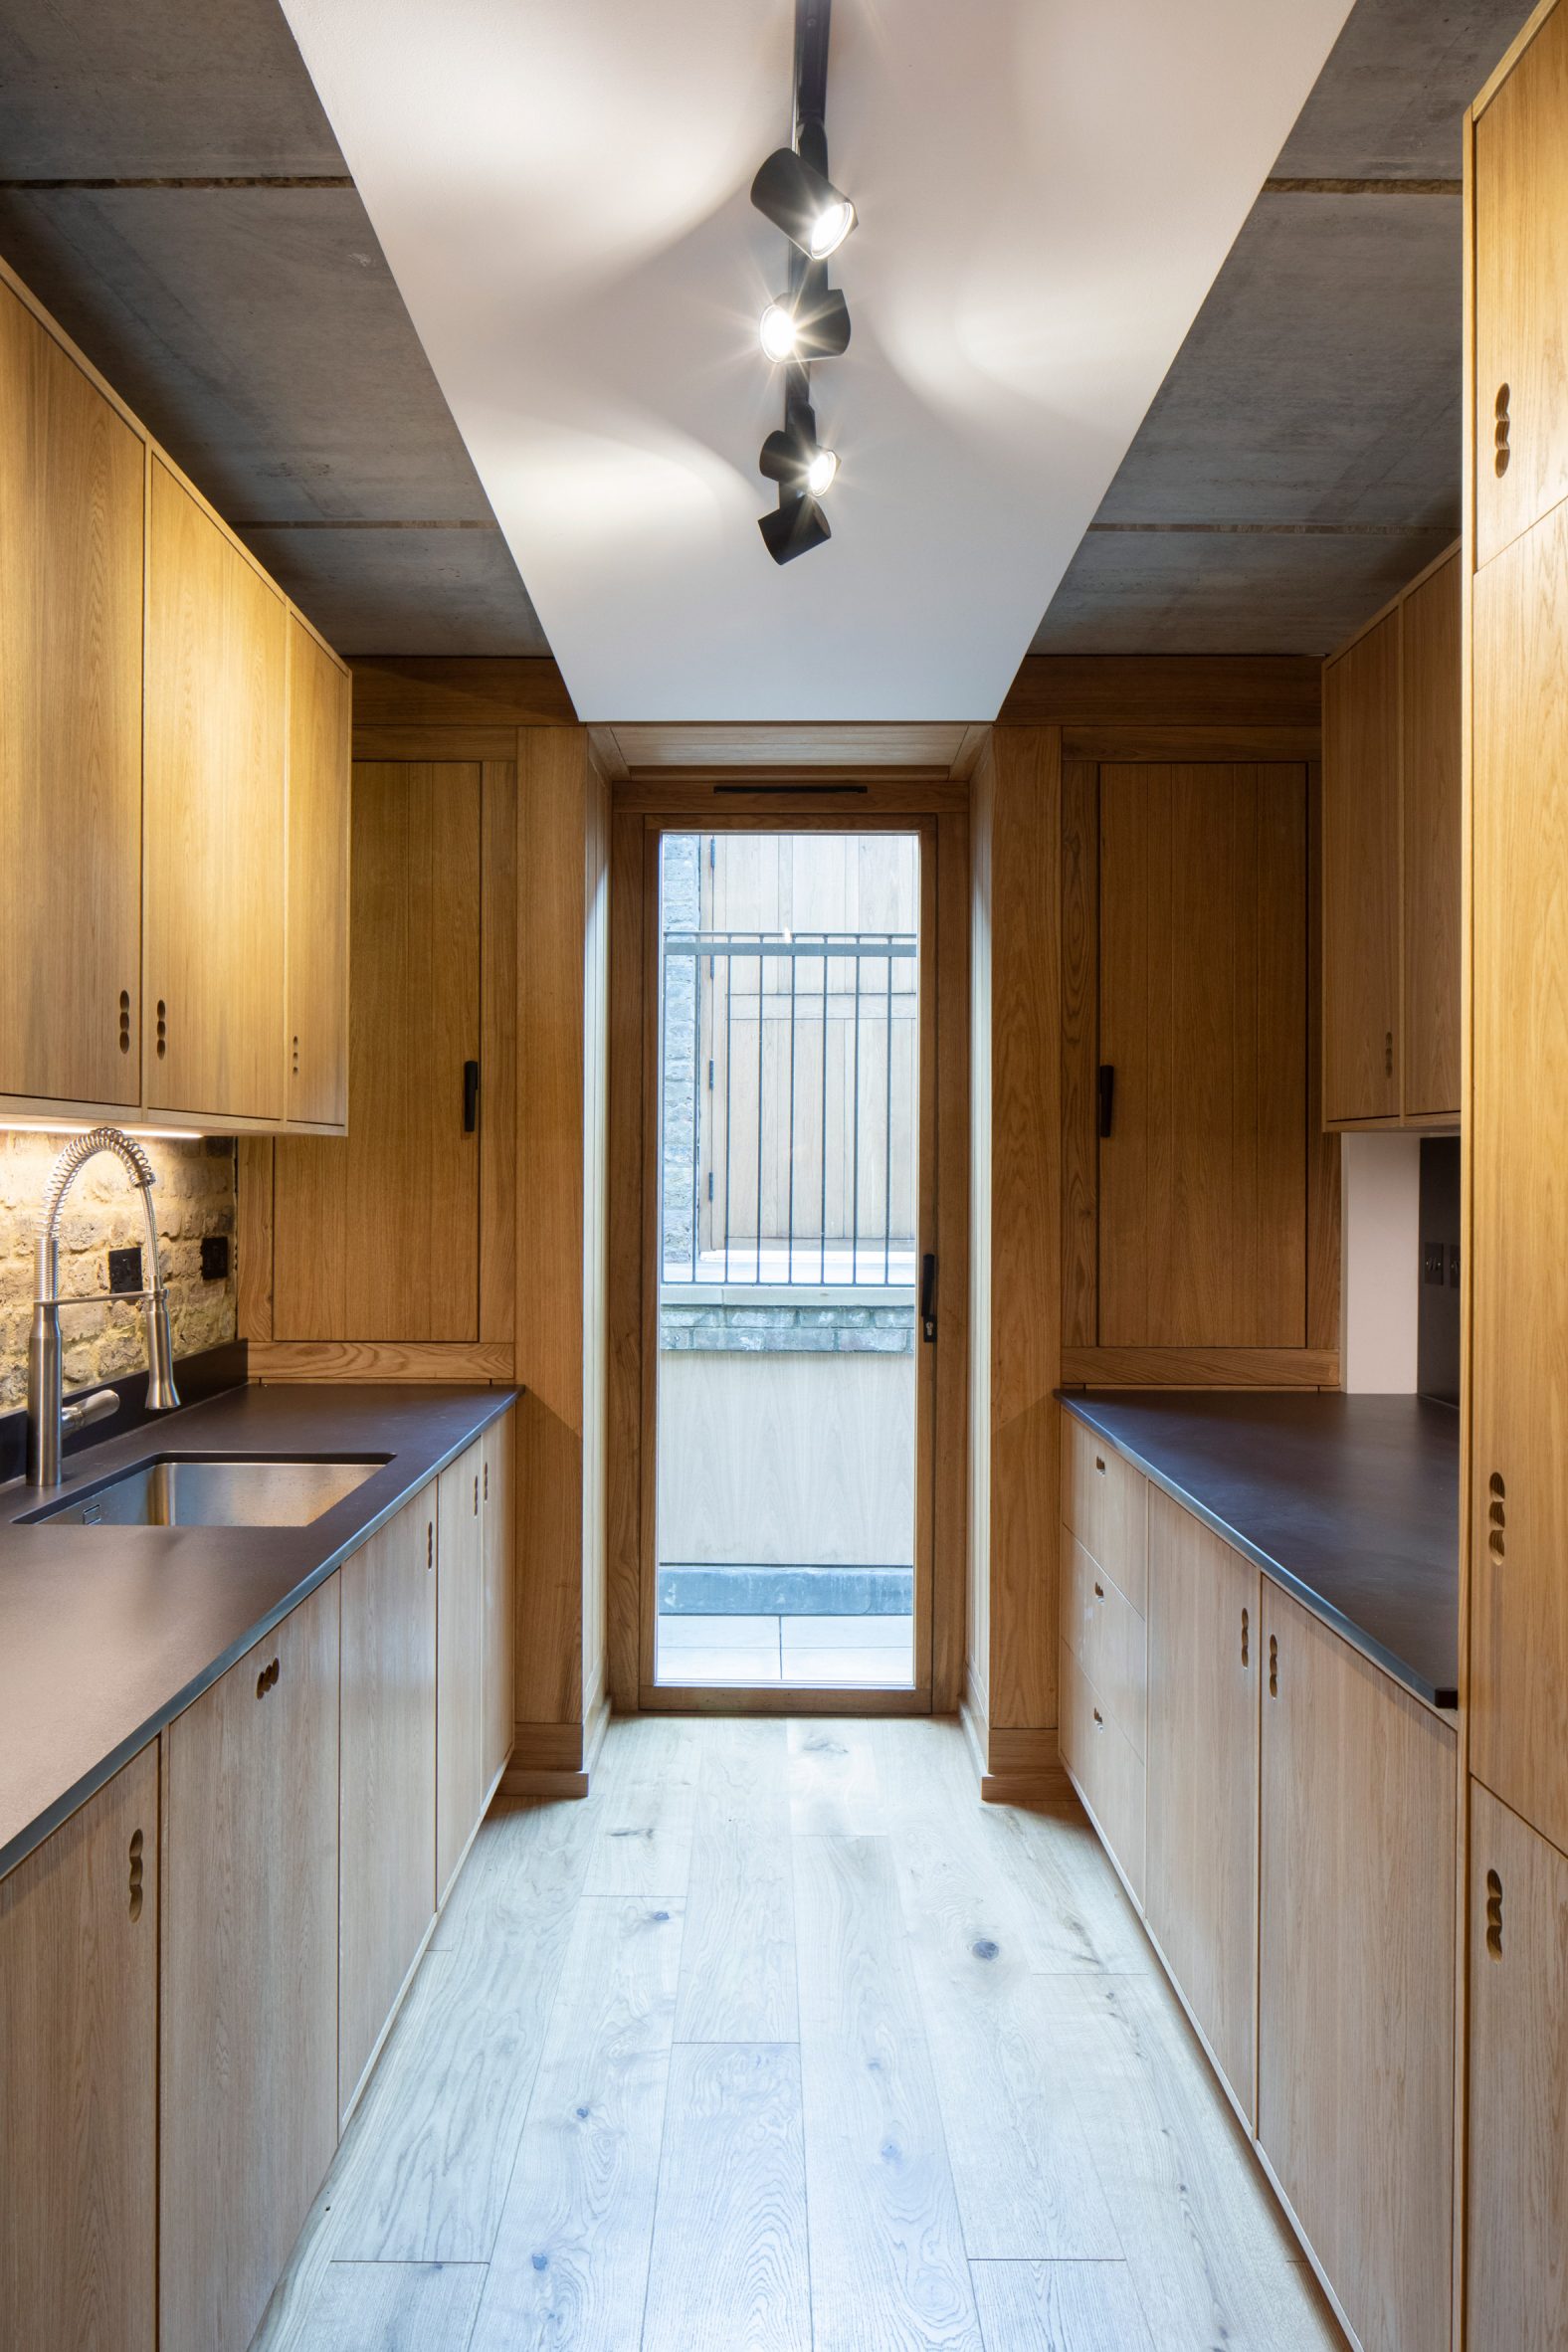 Southwark House's golden-toned kitchen